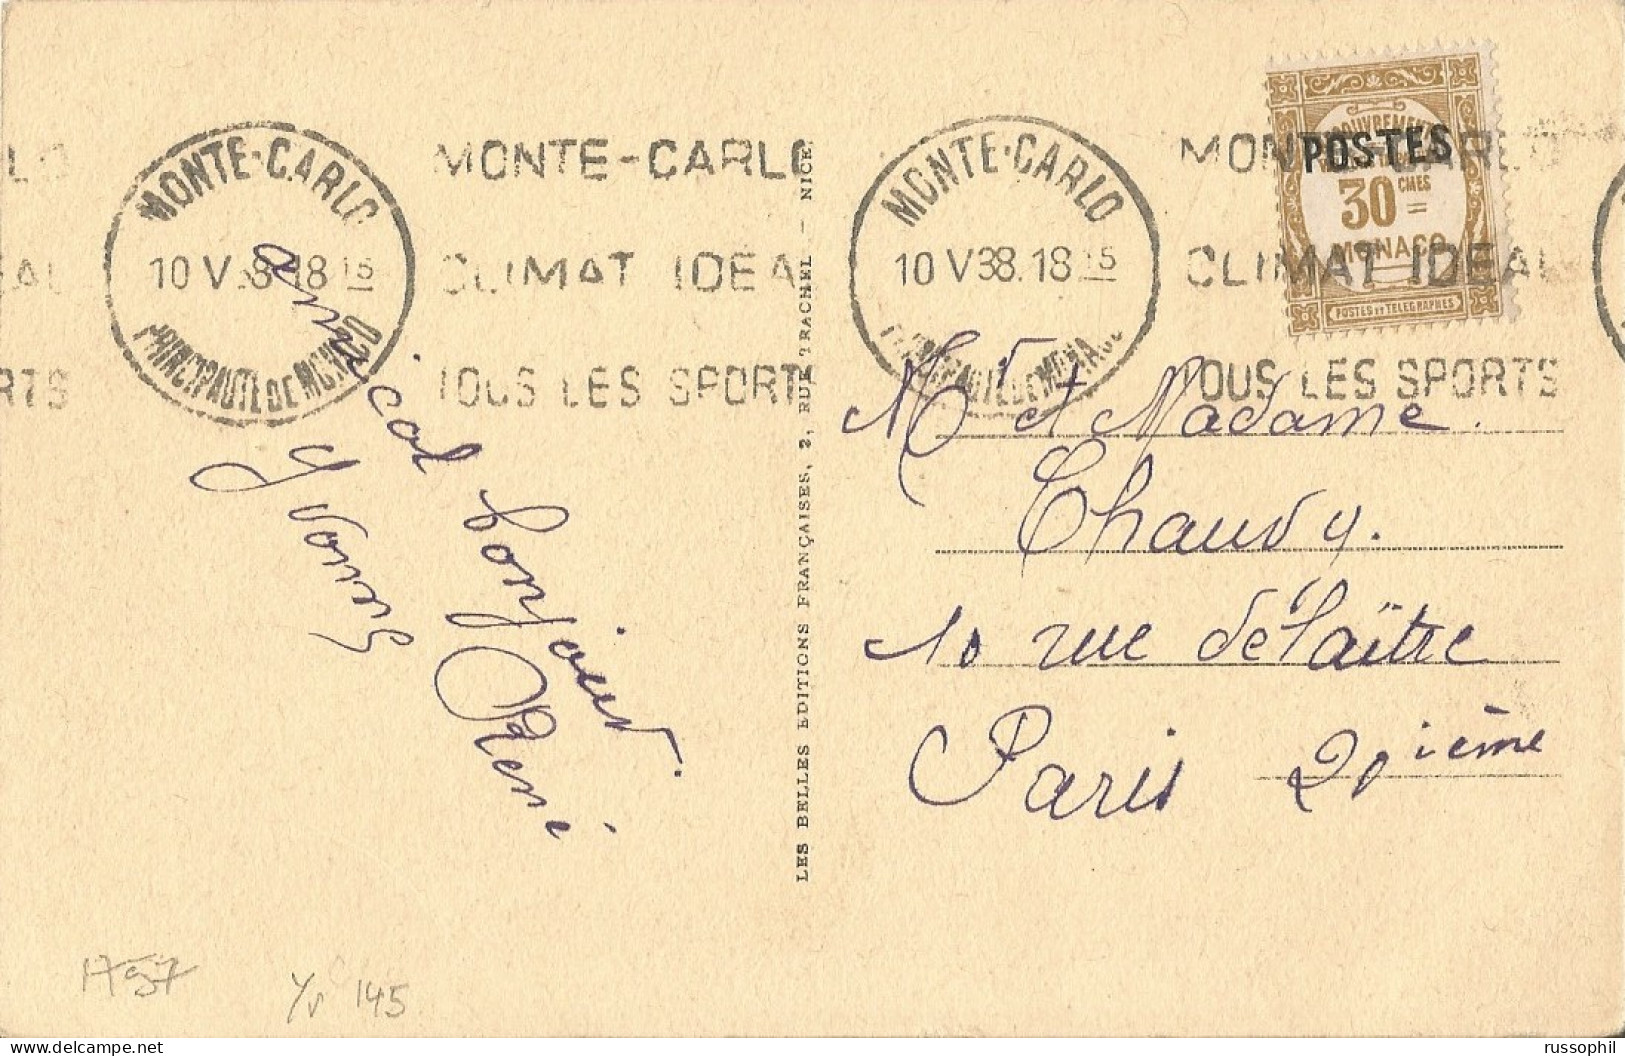 MONACO - Yv #145  ALONE FRANKING PC (VIEW OF MONACO) TO PARIS - 1938  - Lettres & Documents